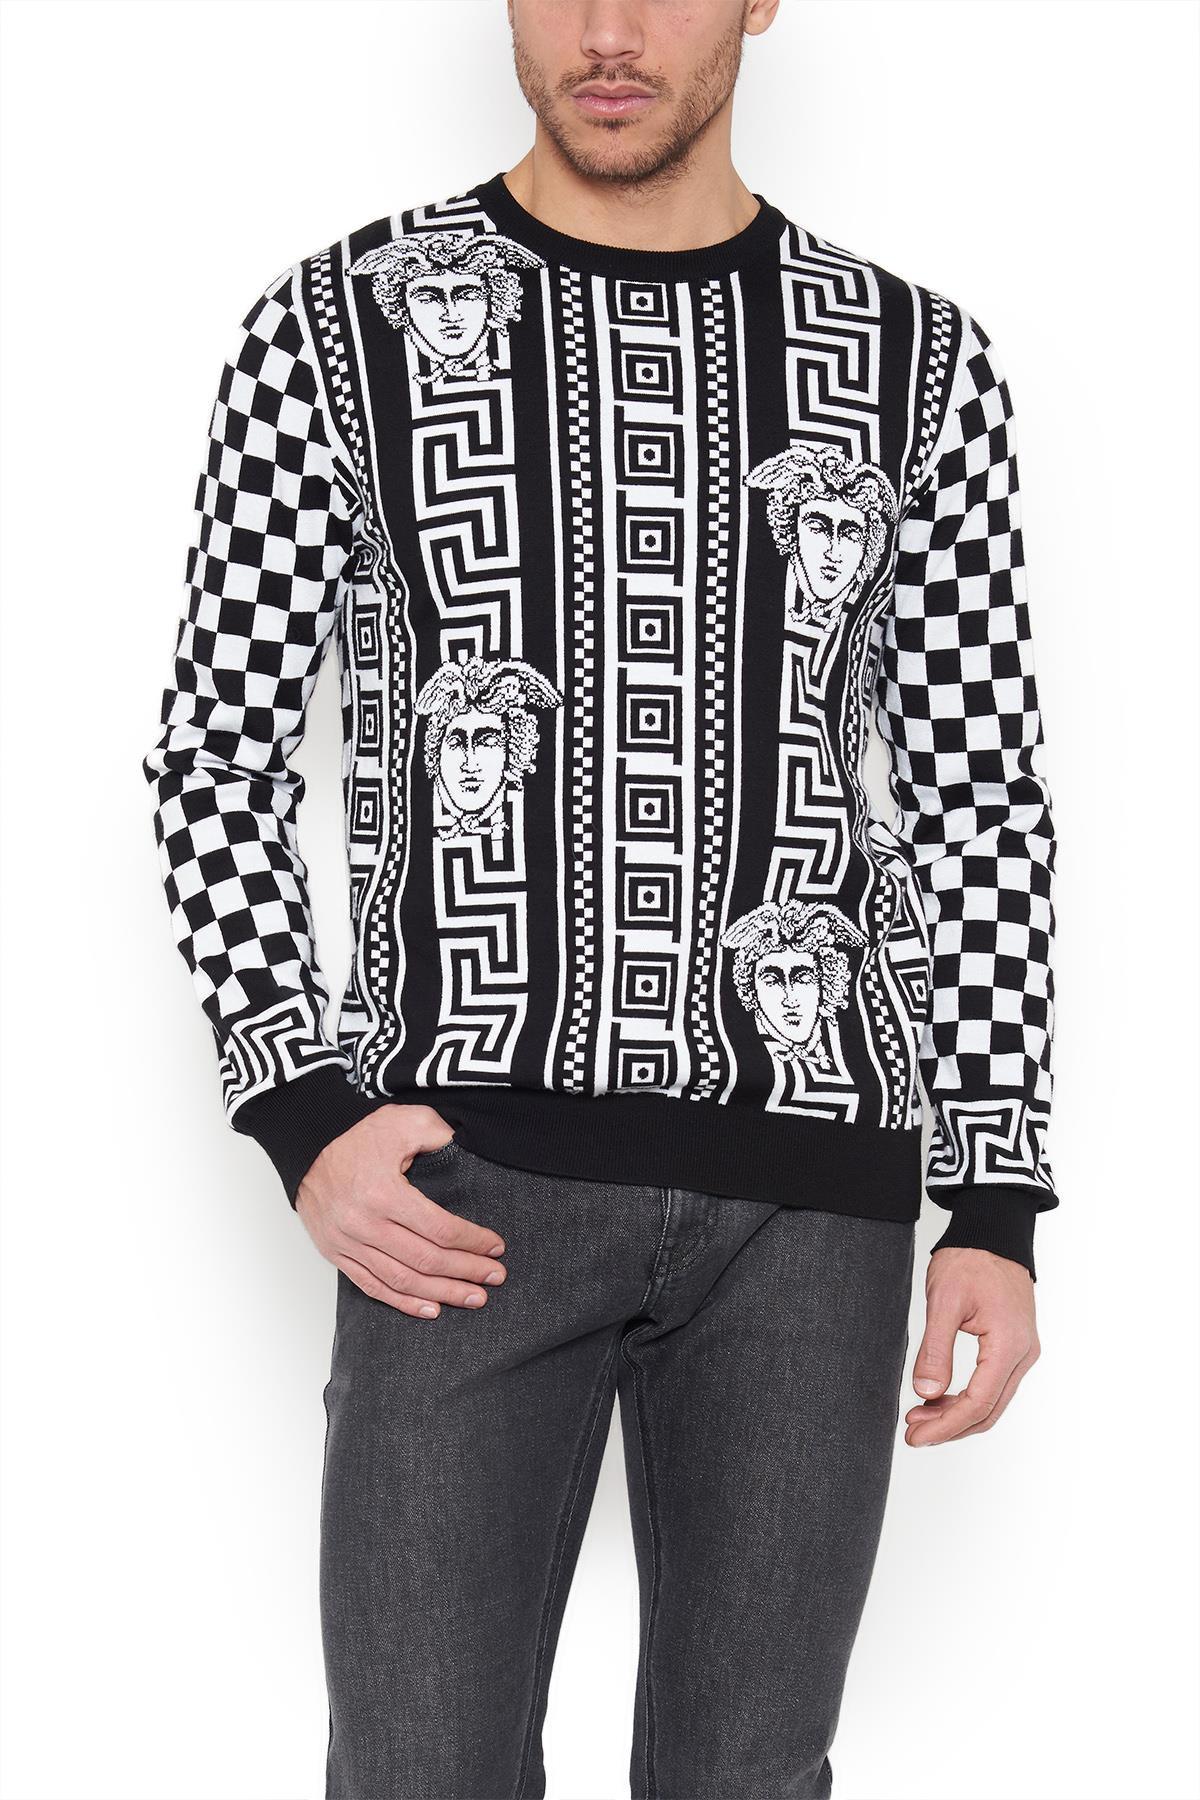 Versace Cotton Greek Motif Checkered Jacquard Sweater in Black/White ...